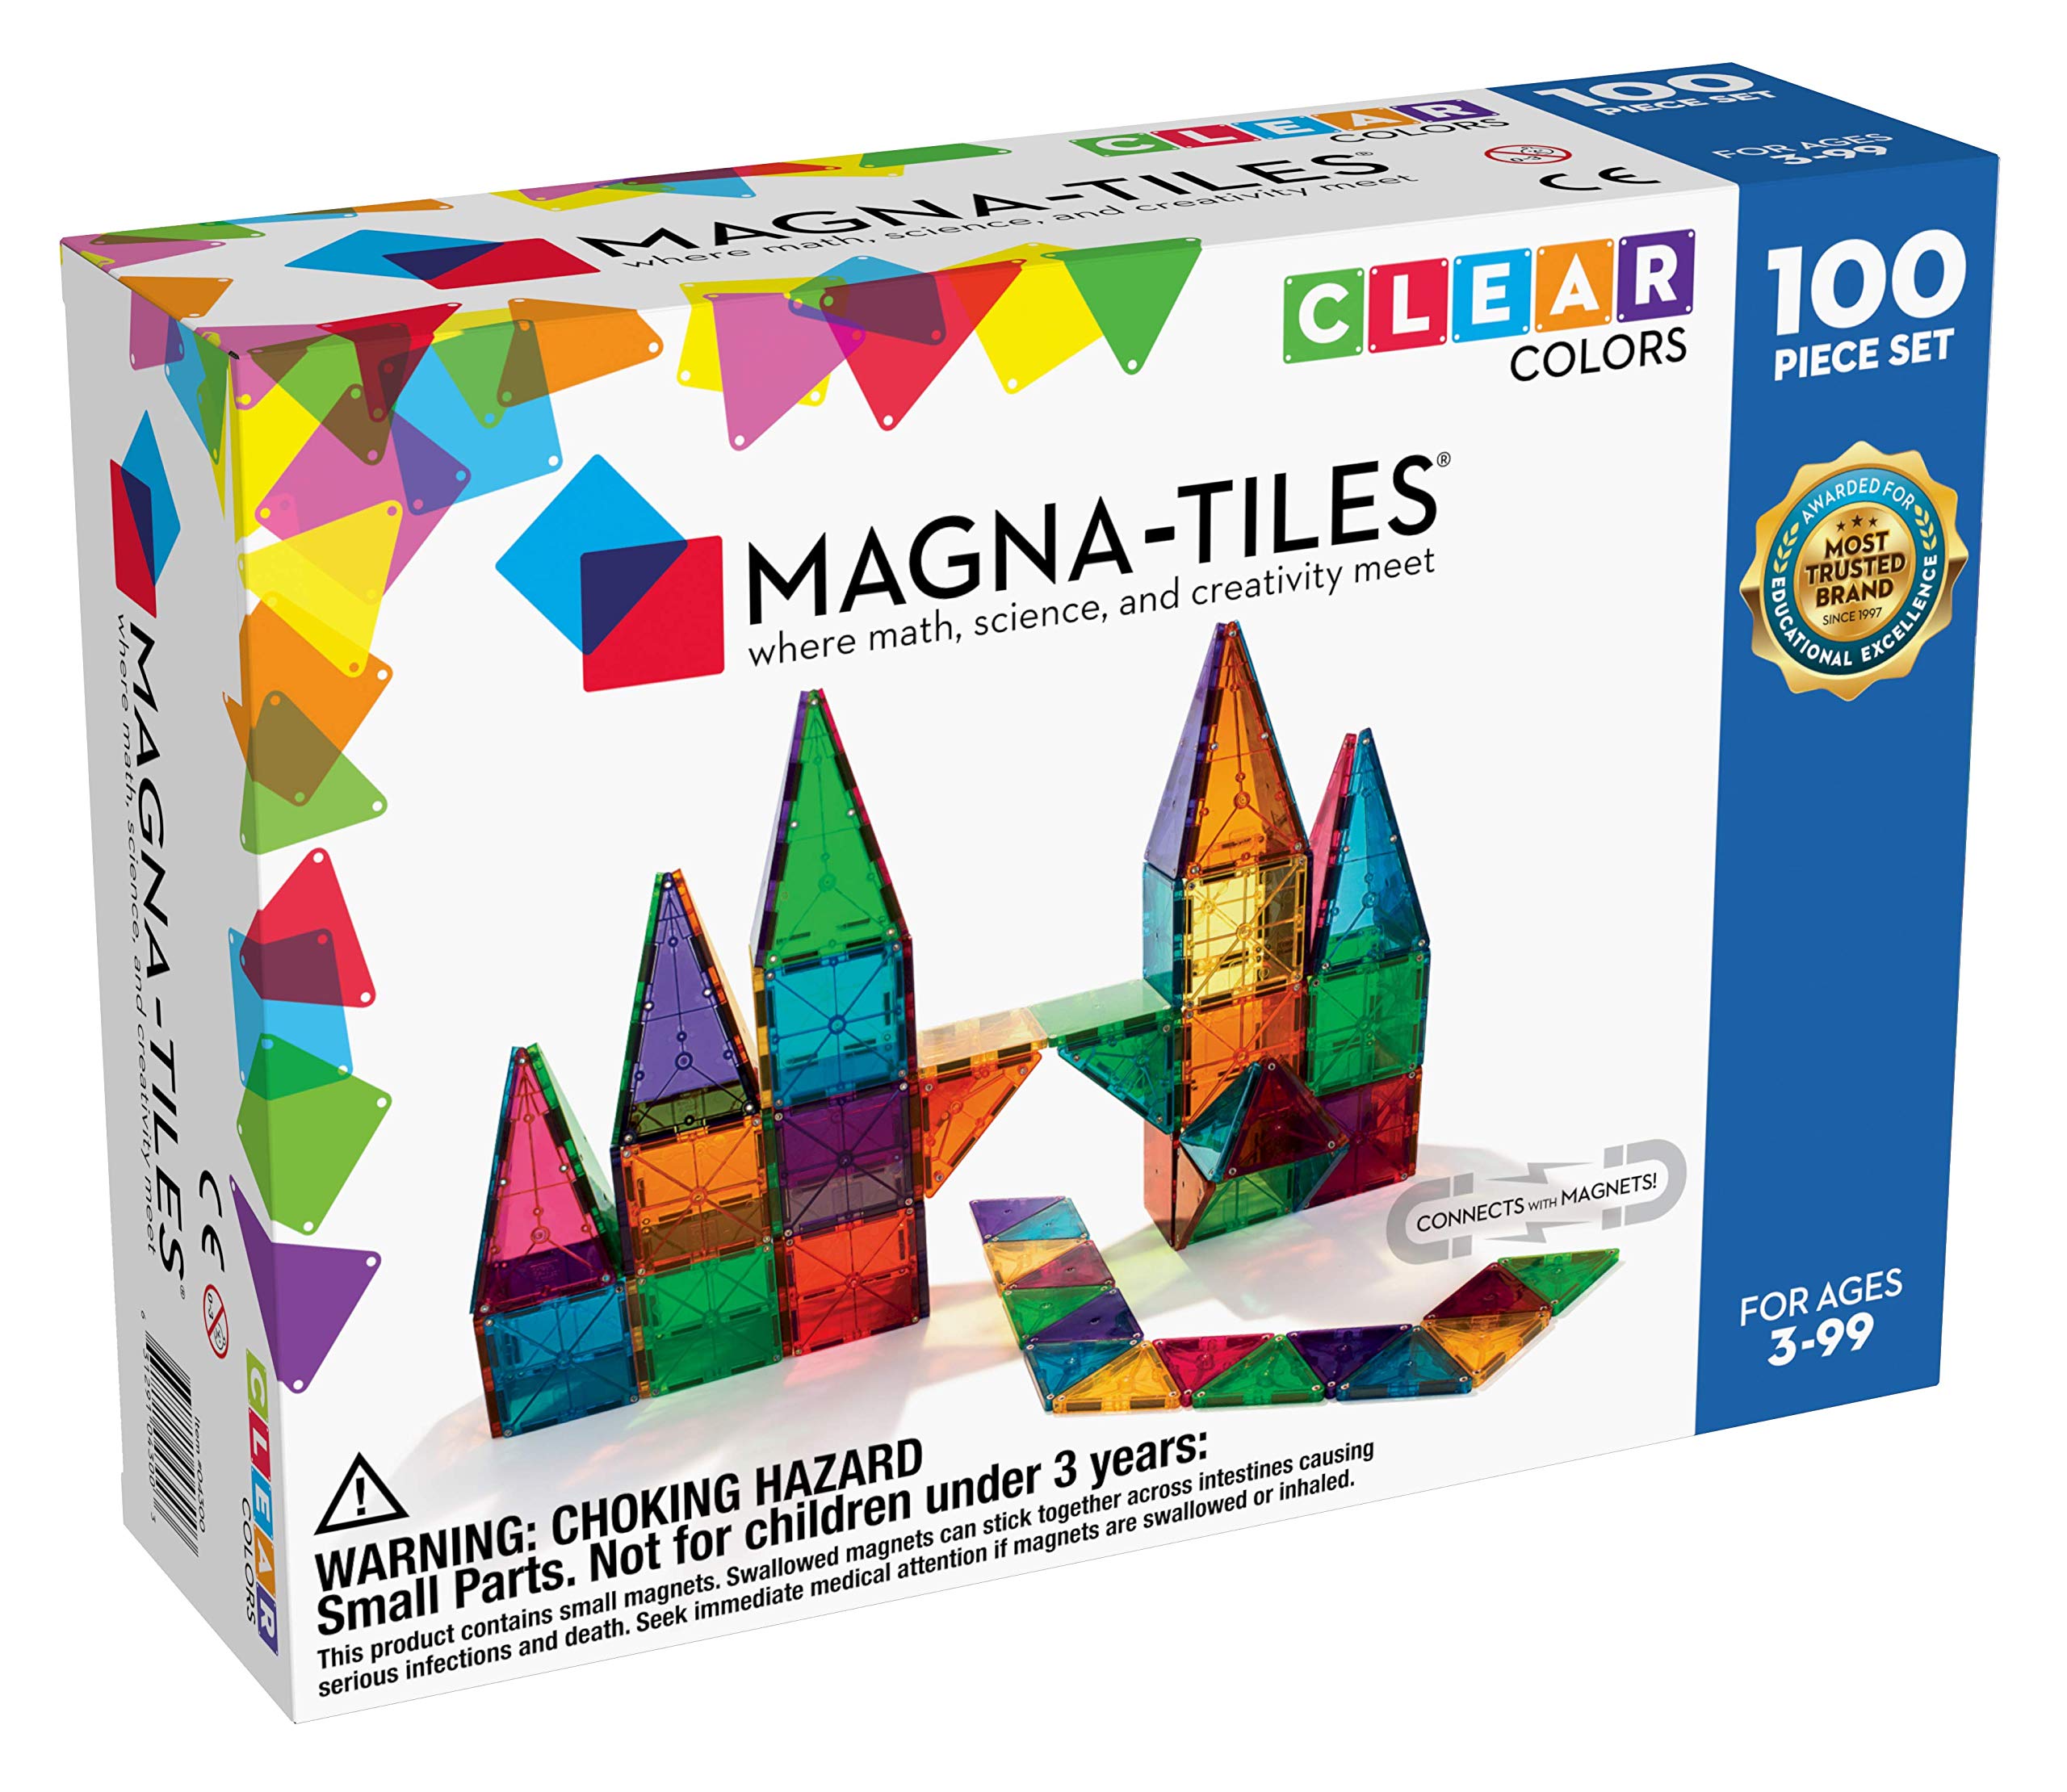 Magna Tiles Magna-Tiles 100 ピース クリア カラー セット、クリエイティブな自由な...